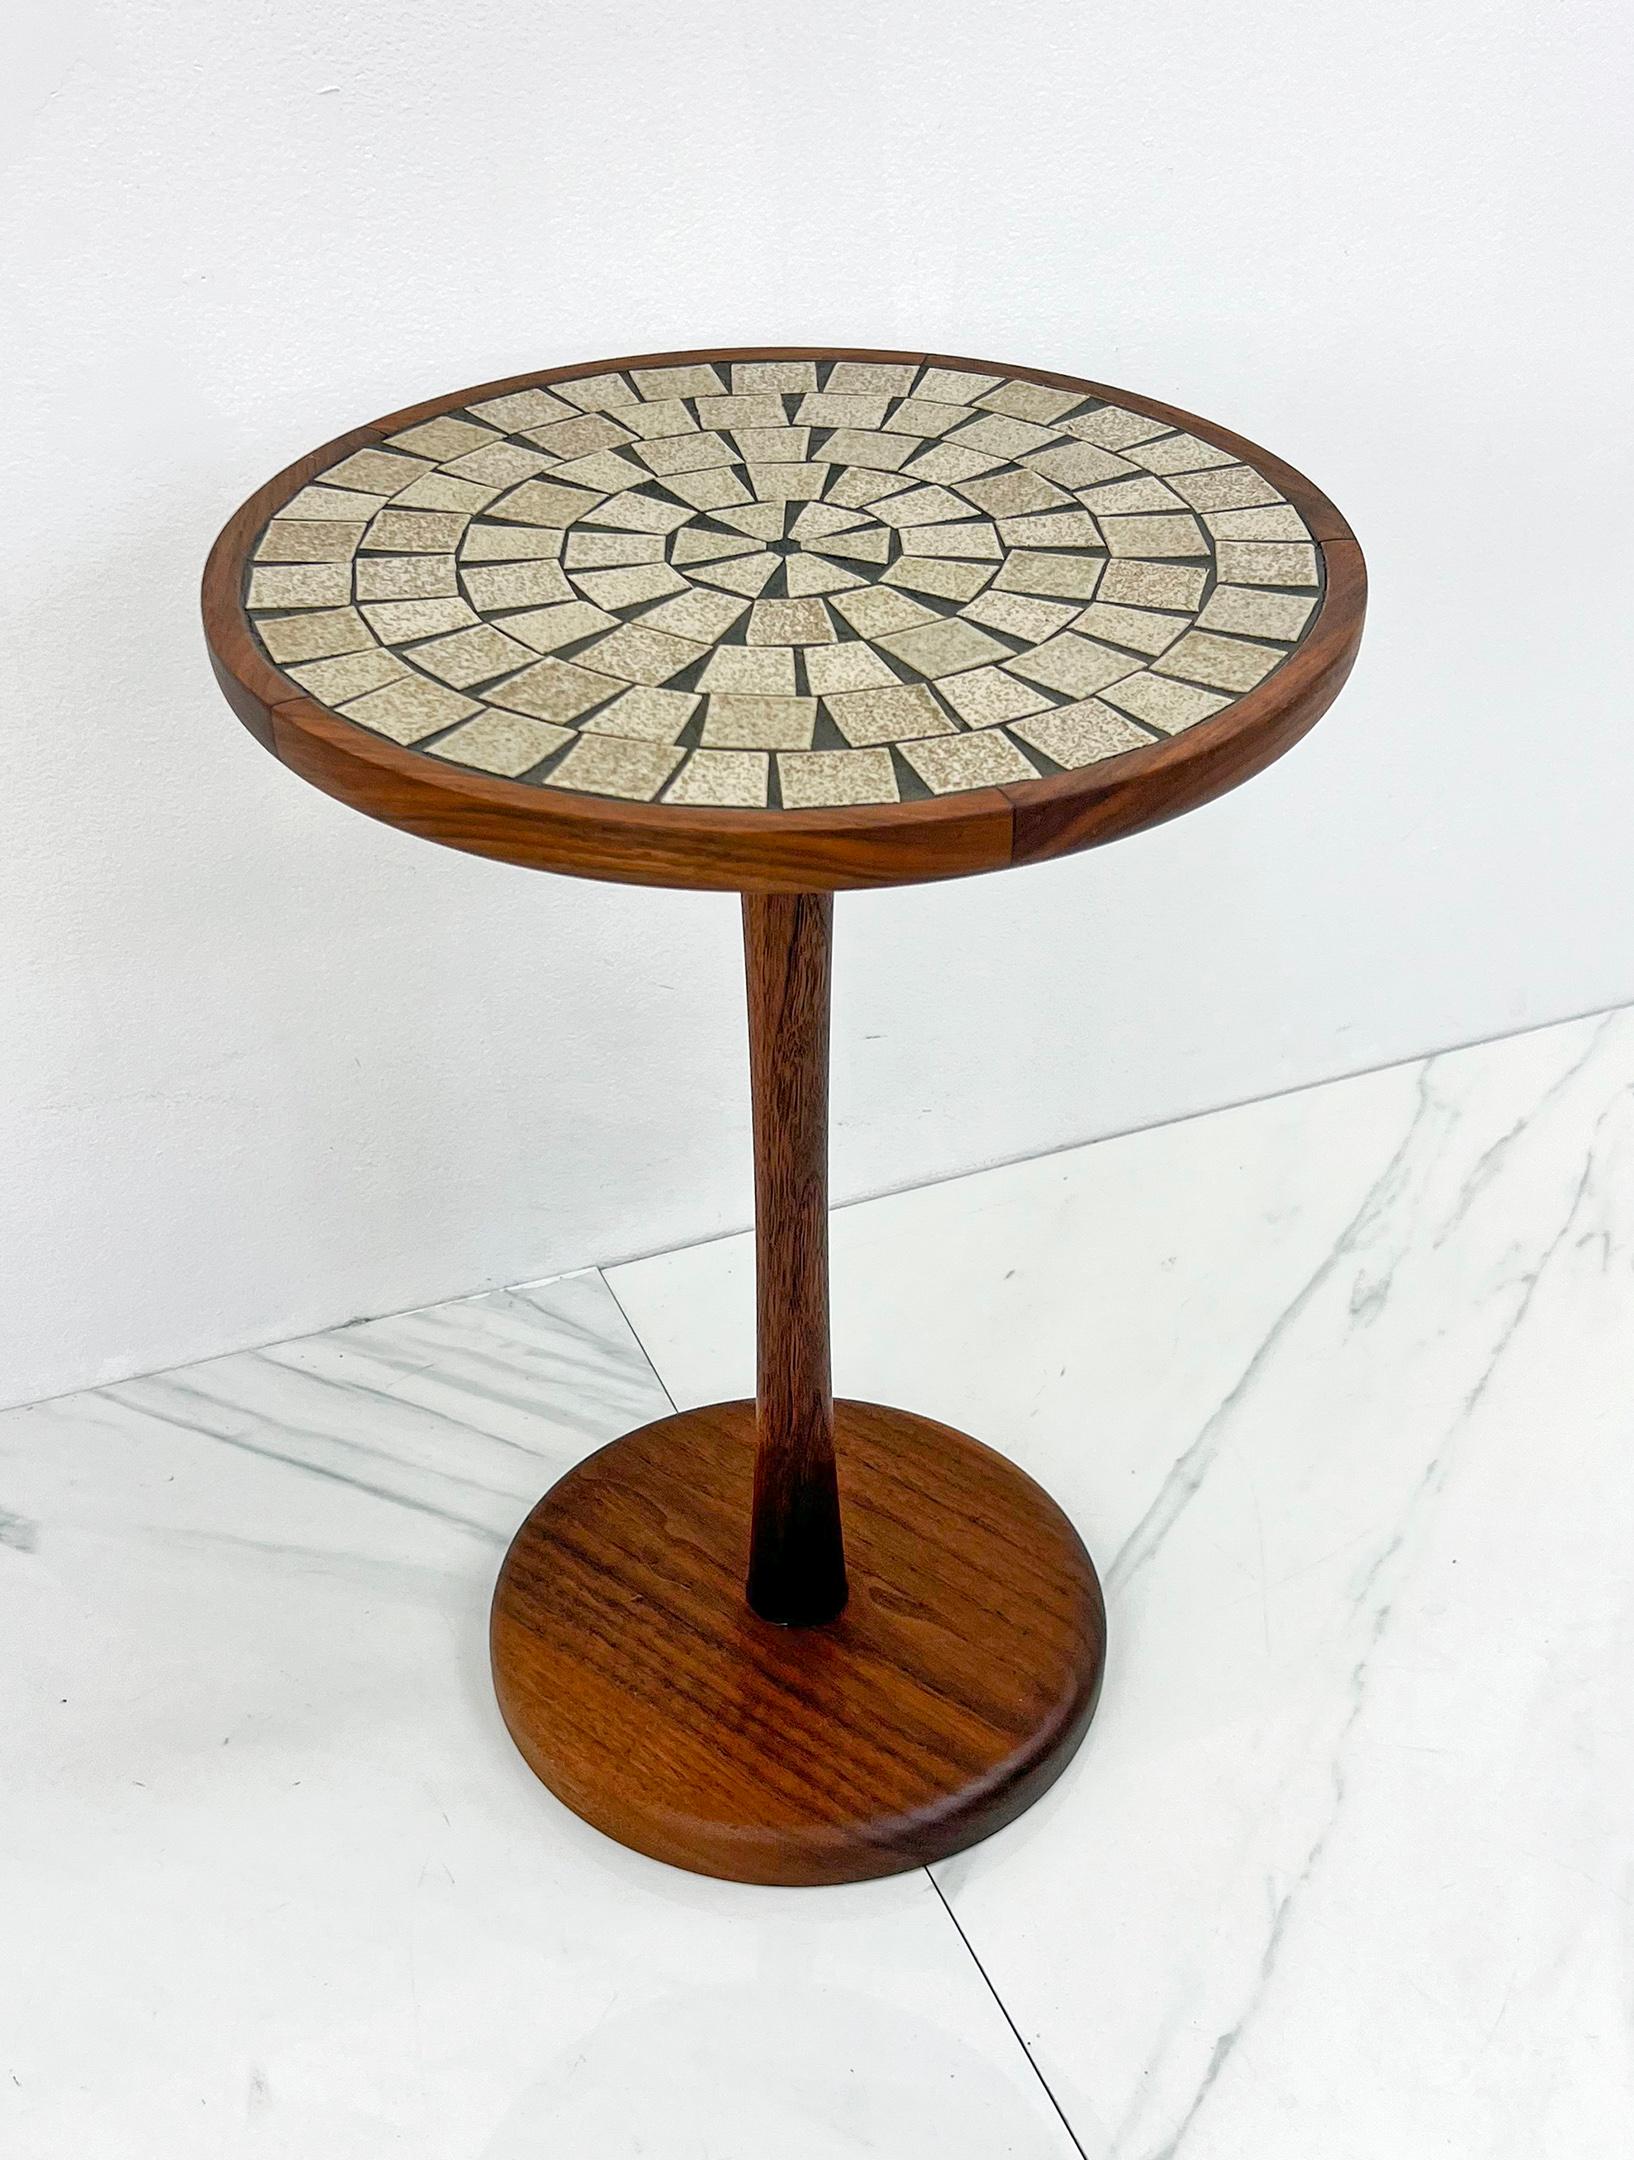 Gordon & Jane Martz Occassional Table, Teak, Ceramic, 1950's For Sale 6